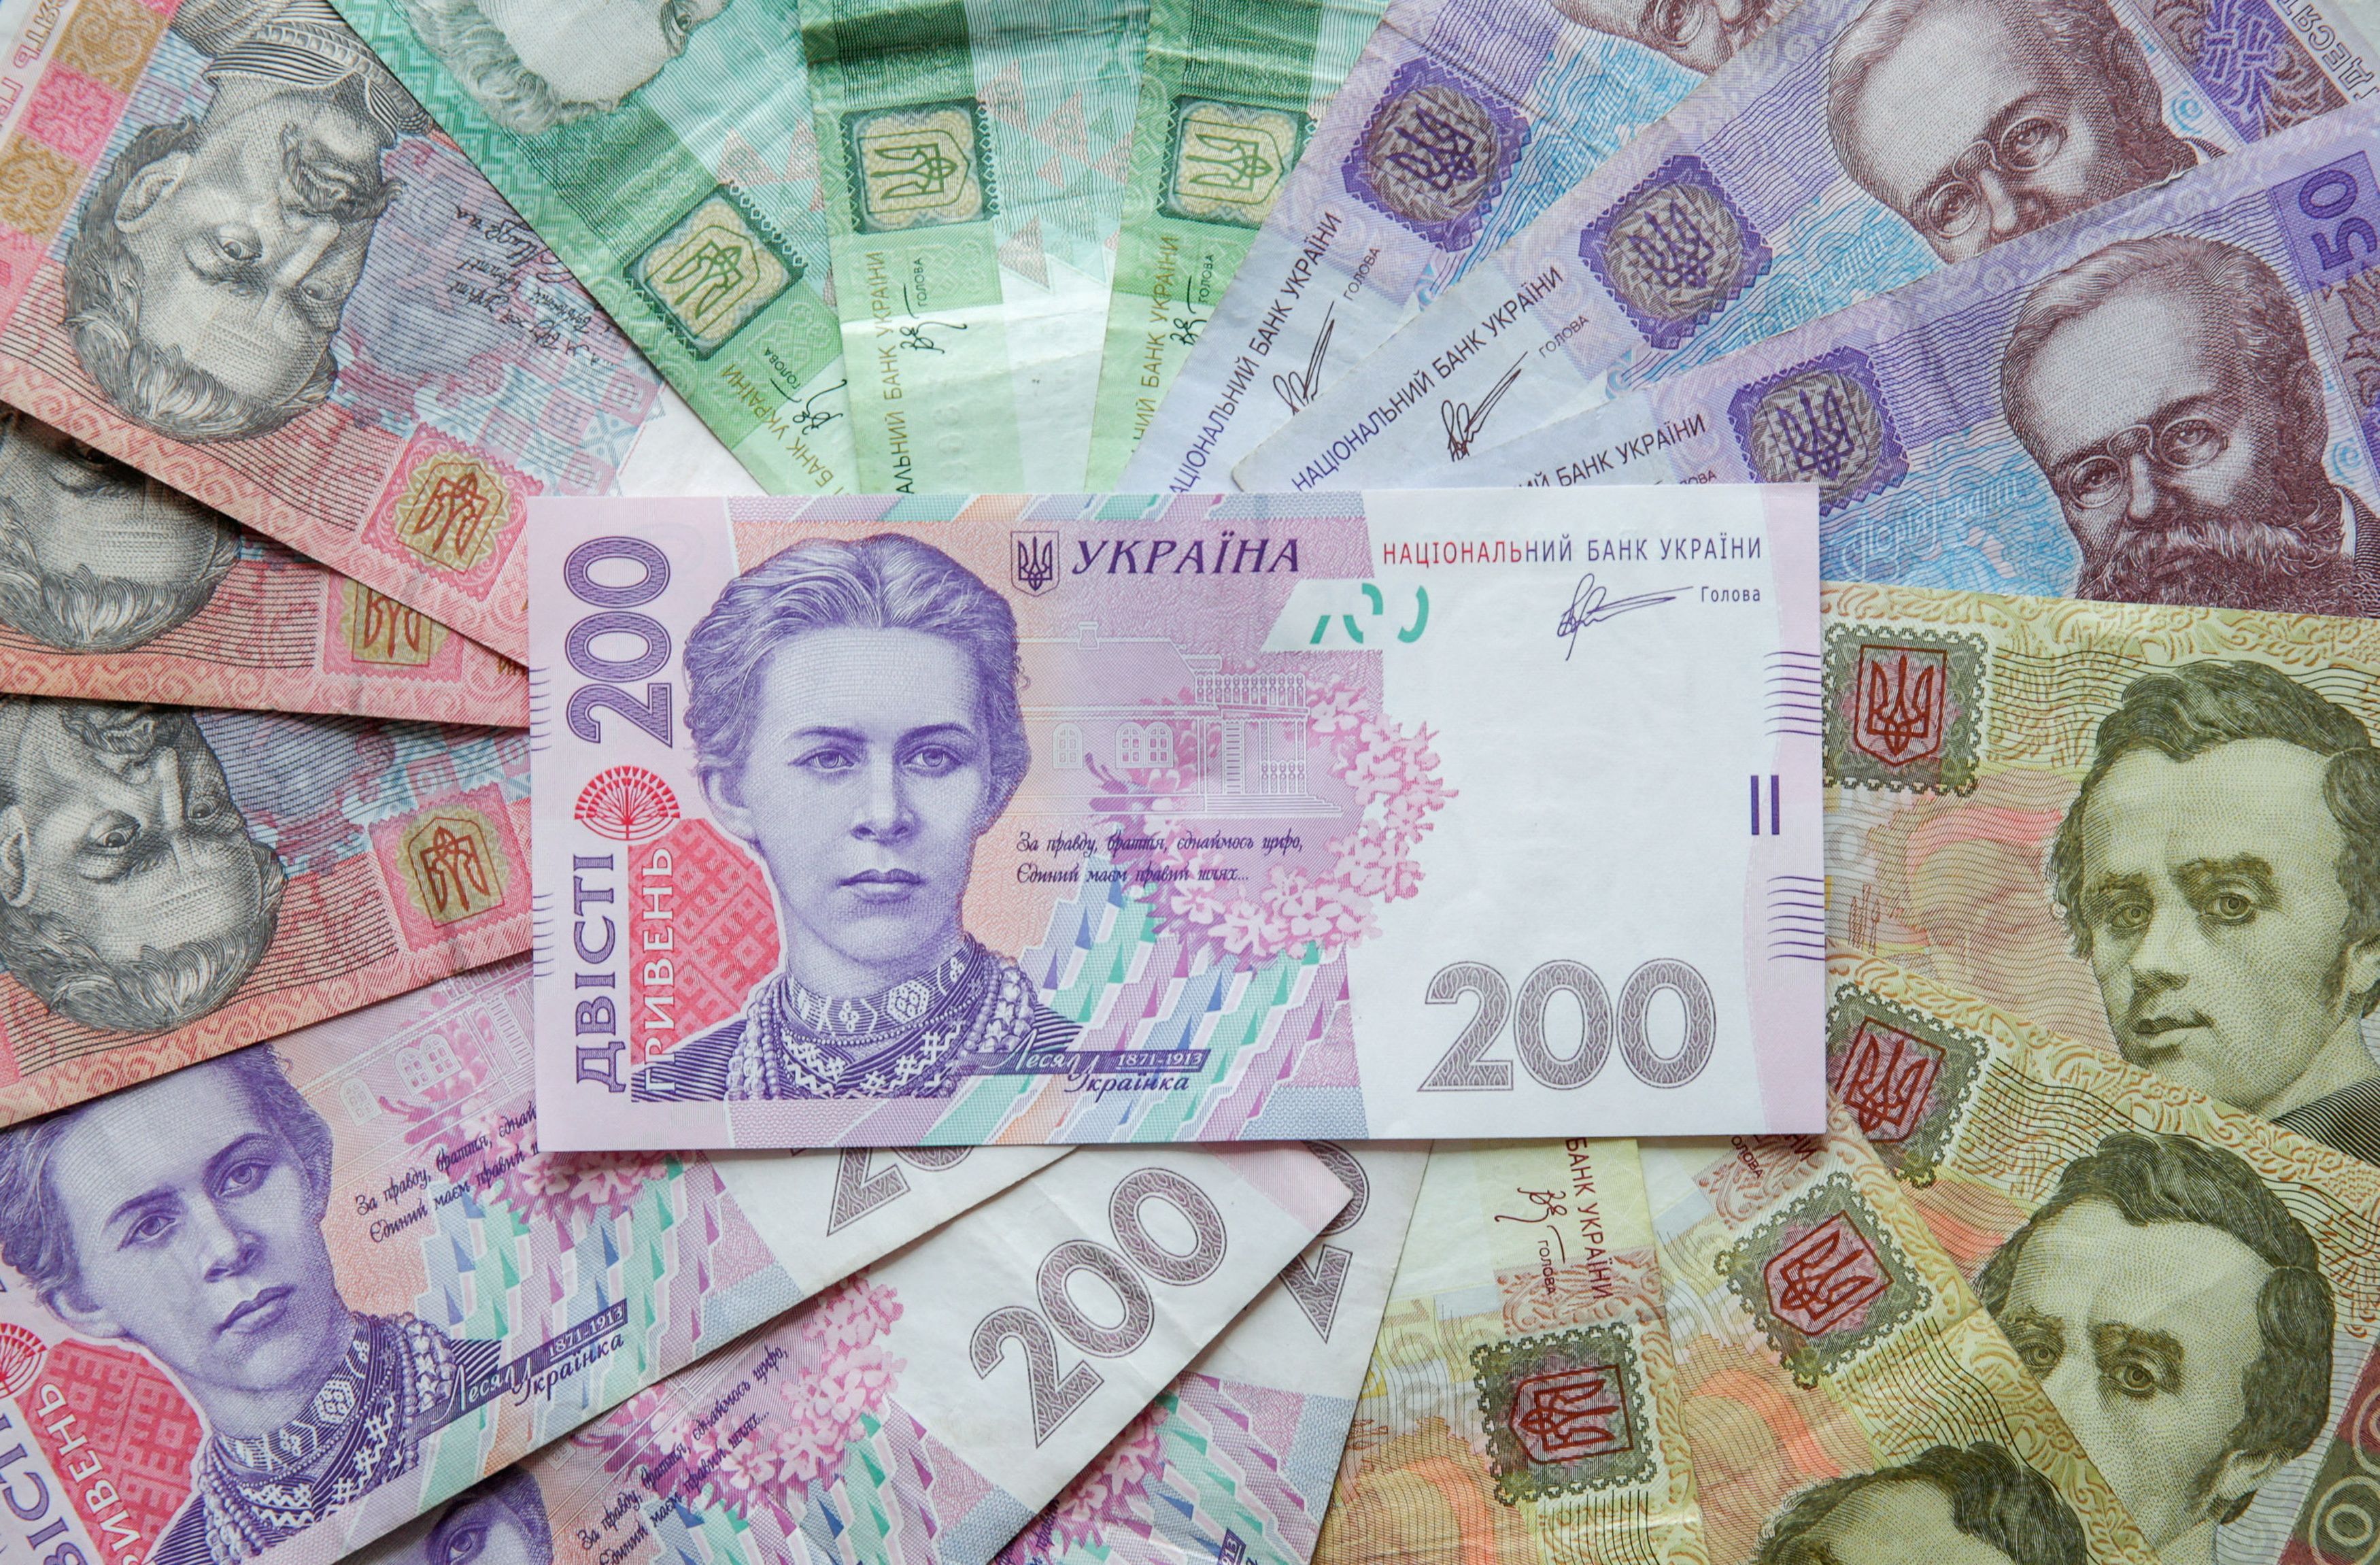 Ukrainian hryvnia banknotes are seen in a photo illustration shot in Kiev, Ukraine